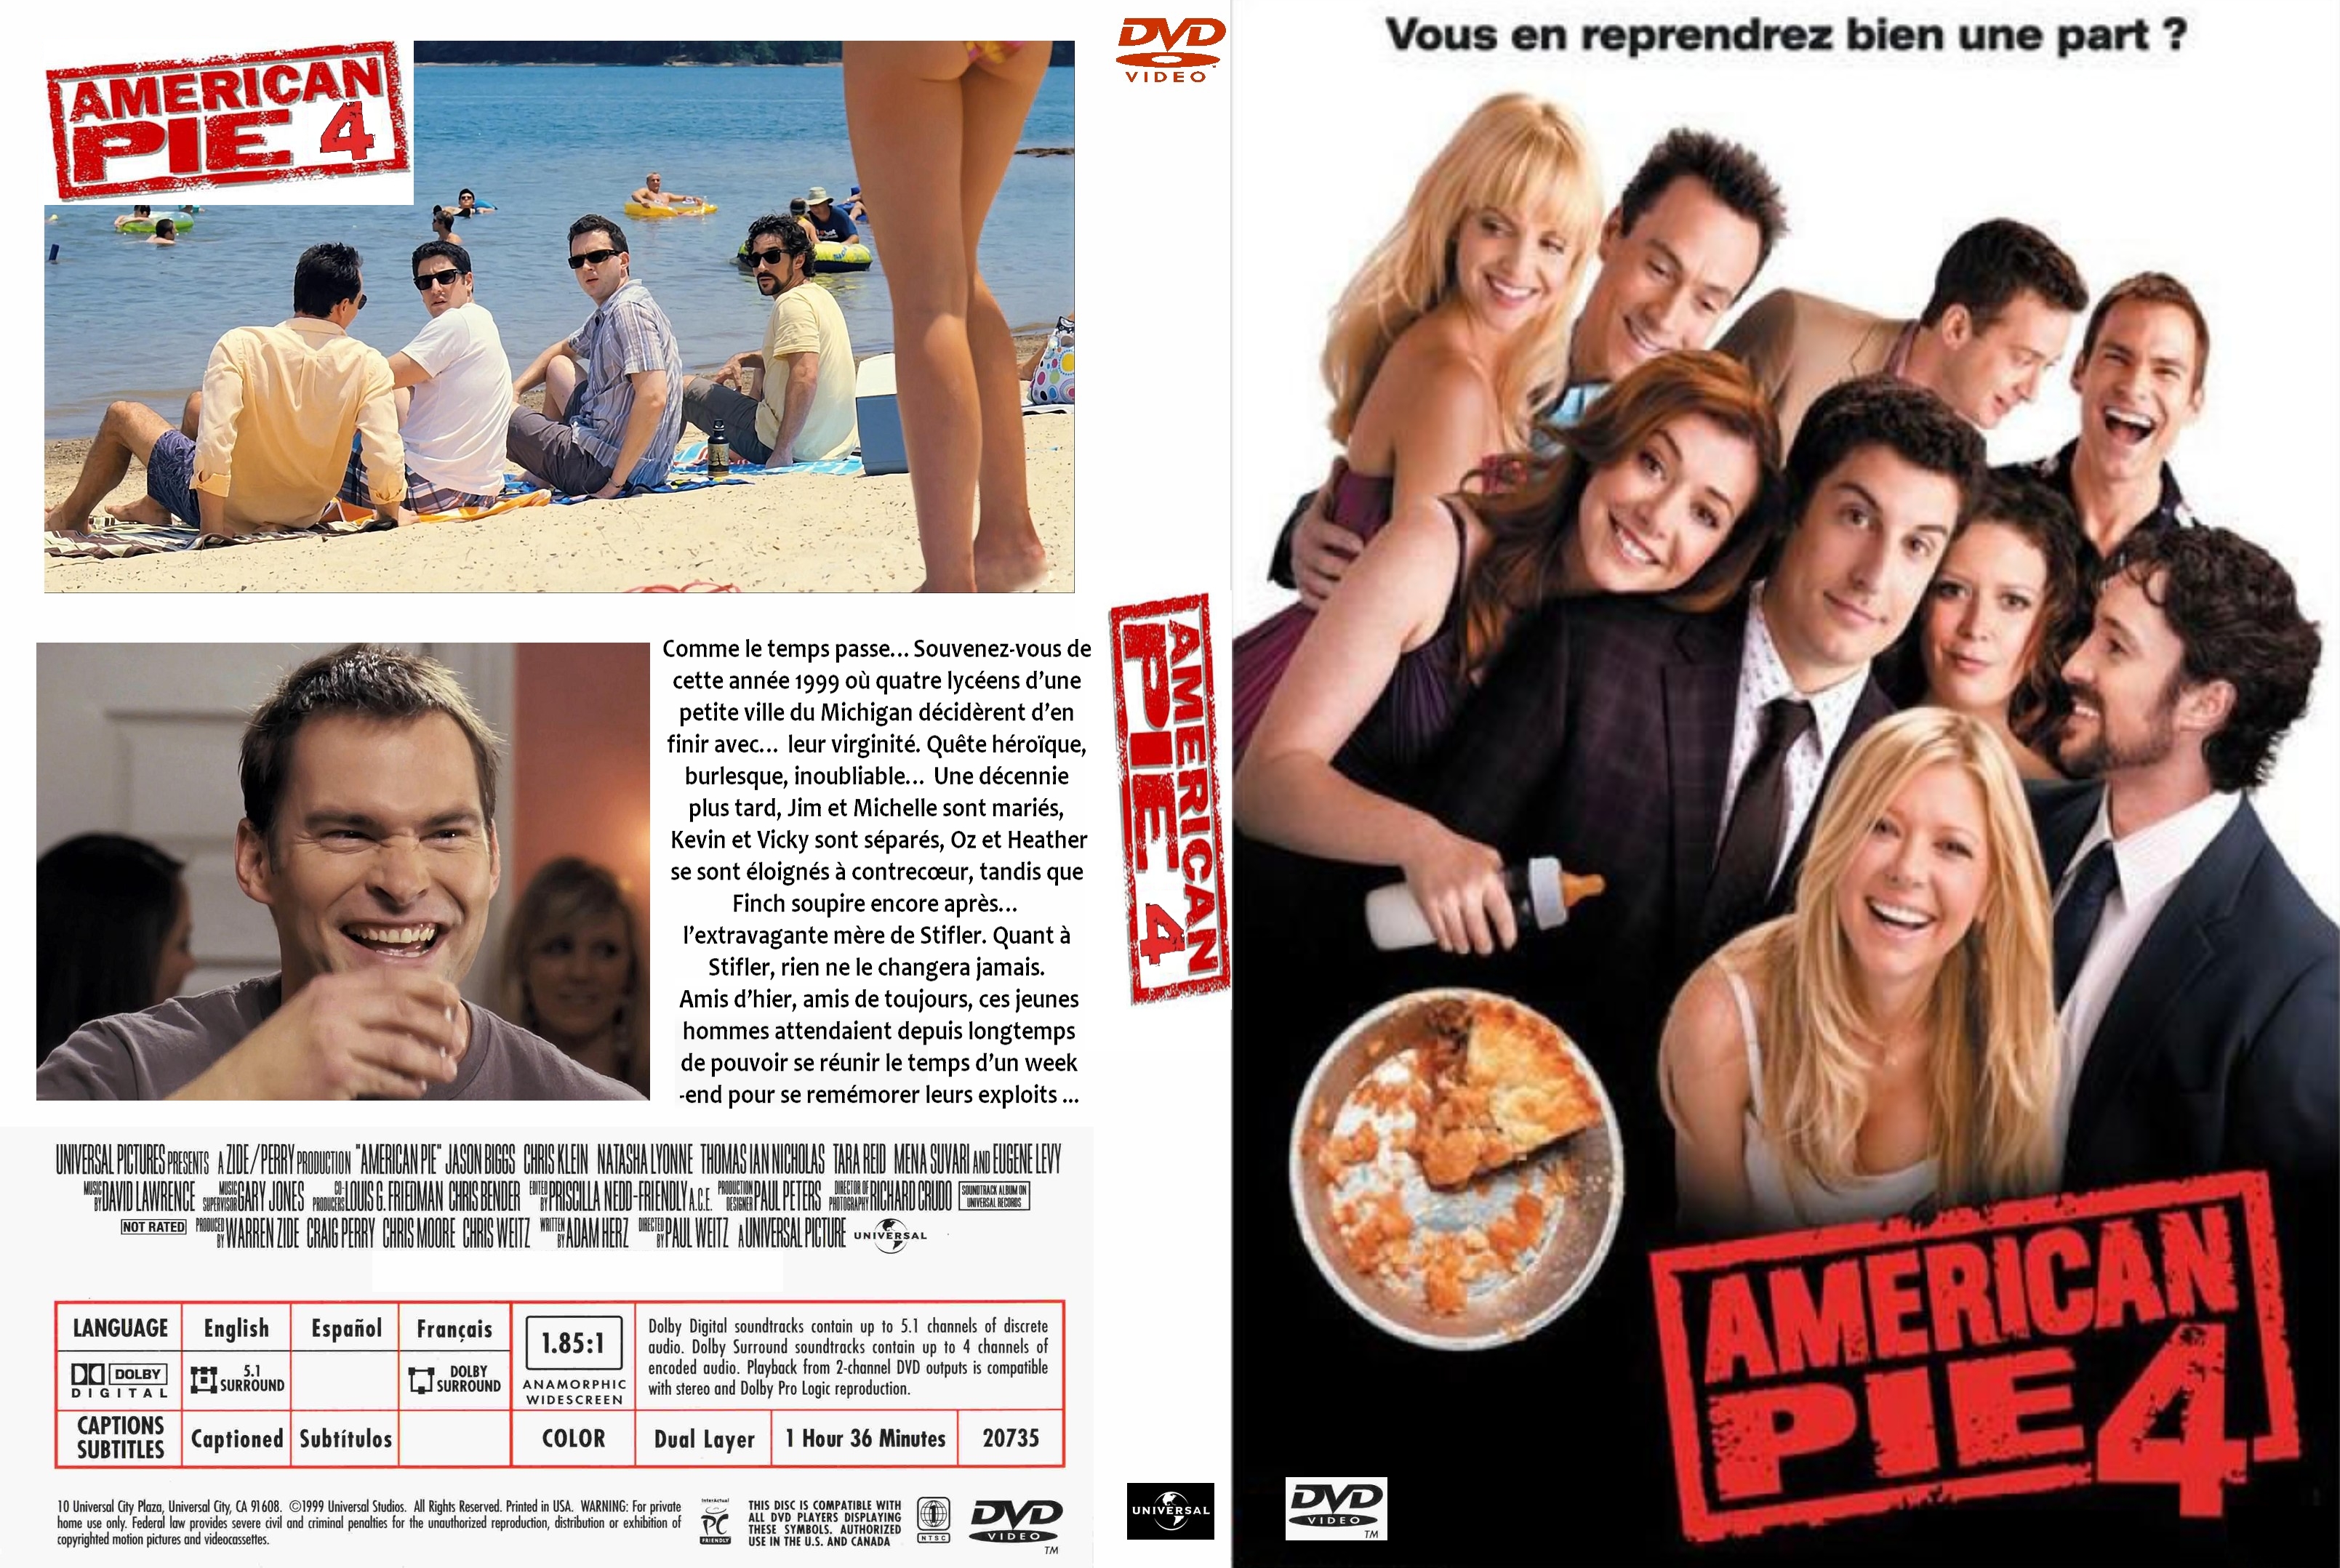 Jaquette DVD American Pie 4 custom